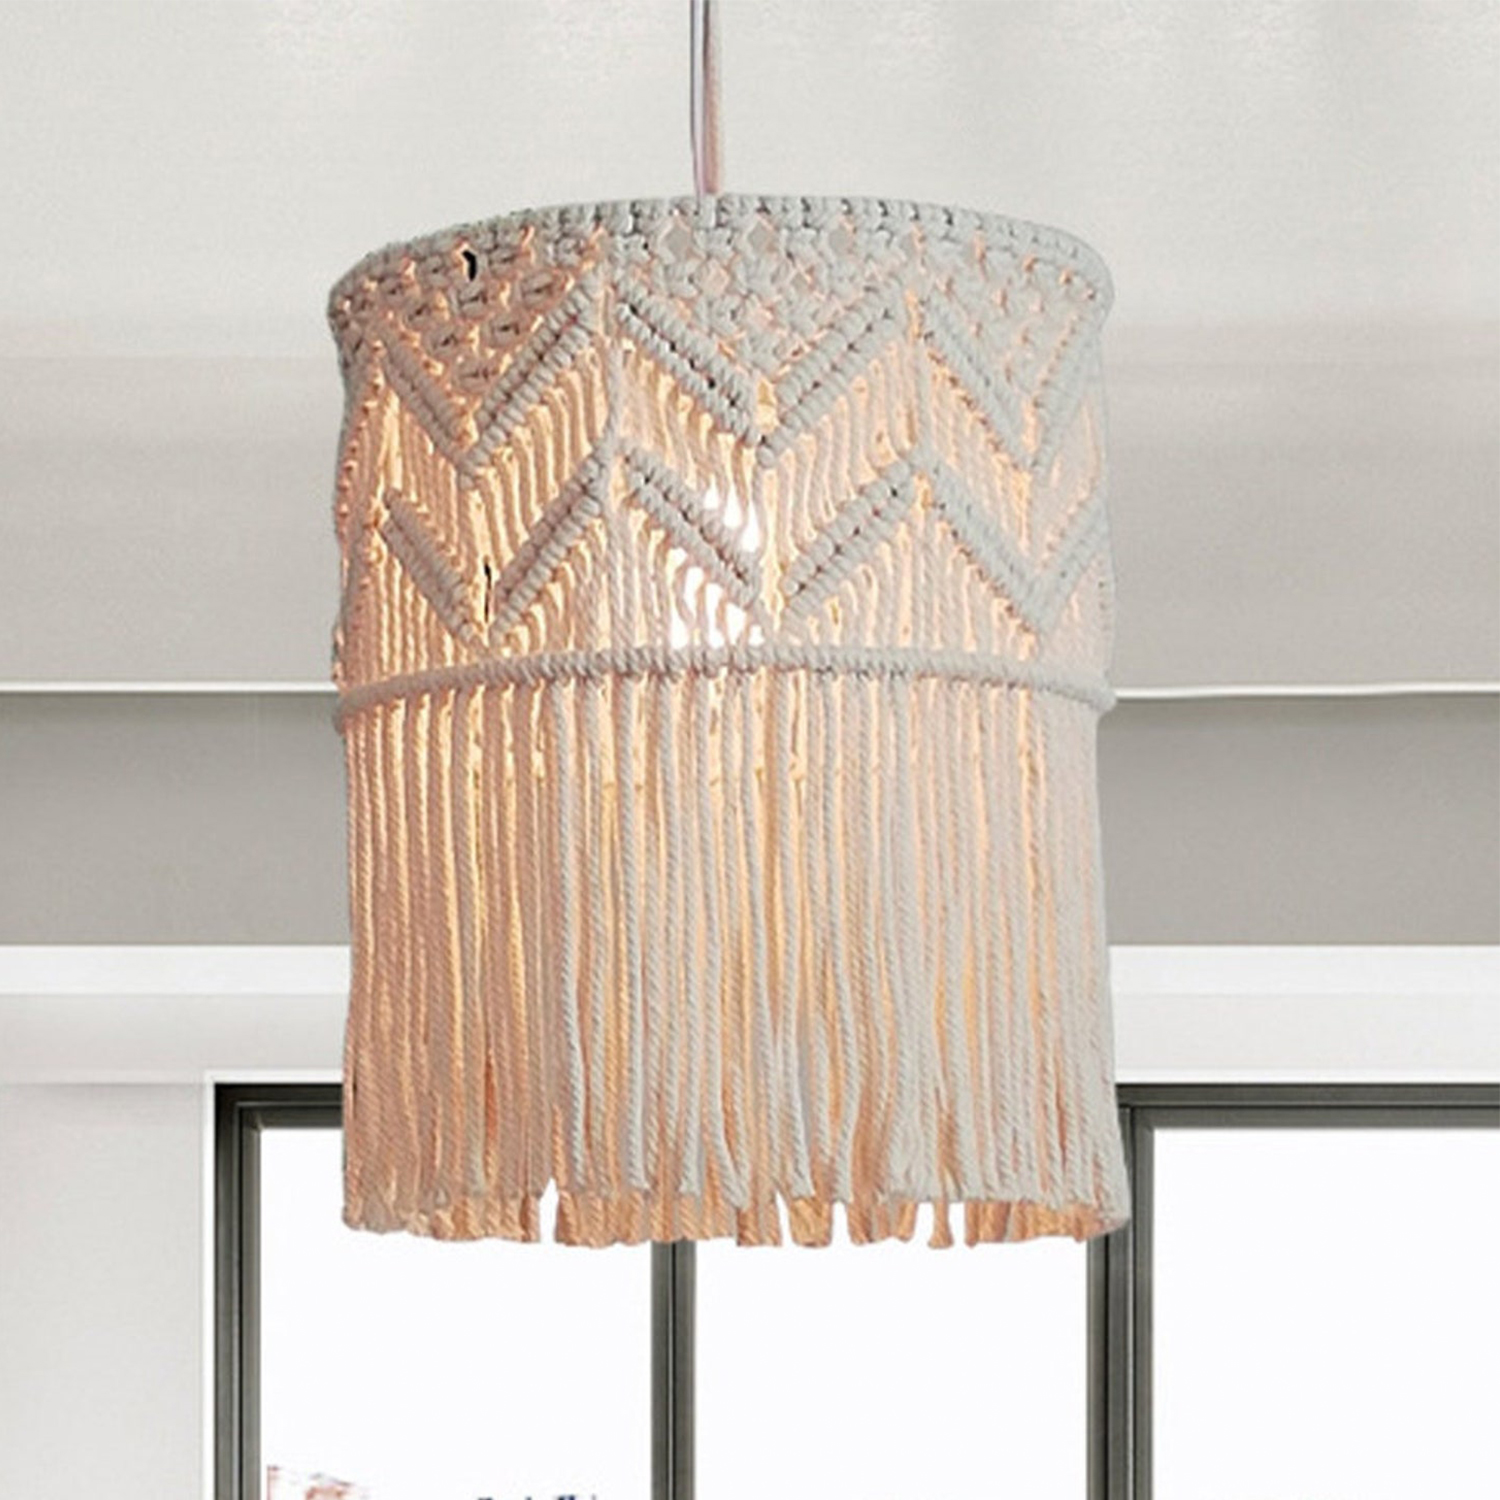 macrame bohemian chandelier ceiling pendant lamp manufacturer, exporter and supplier